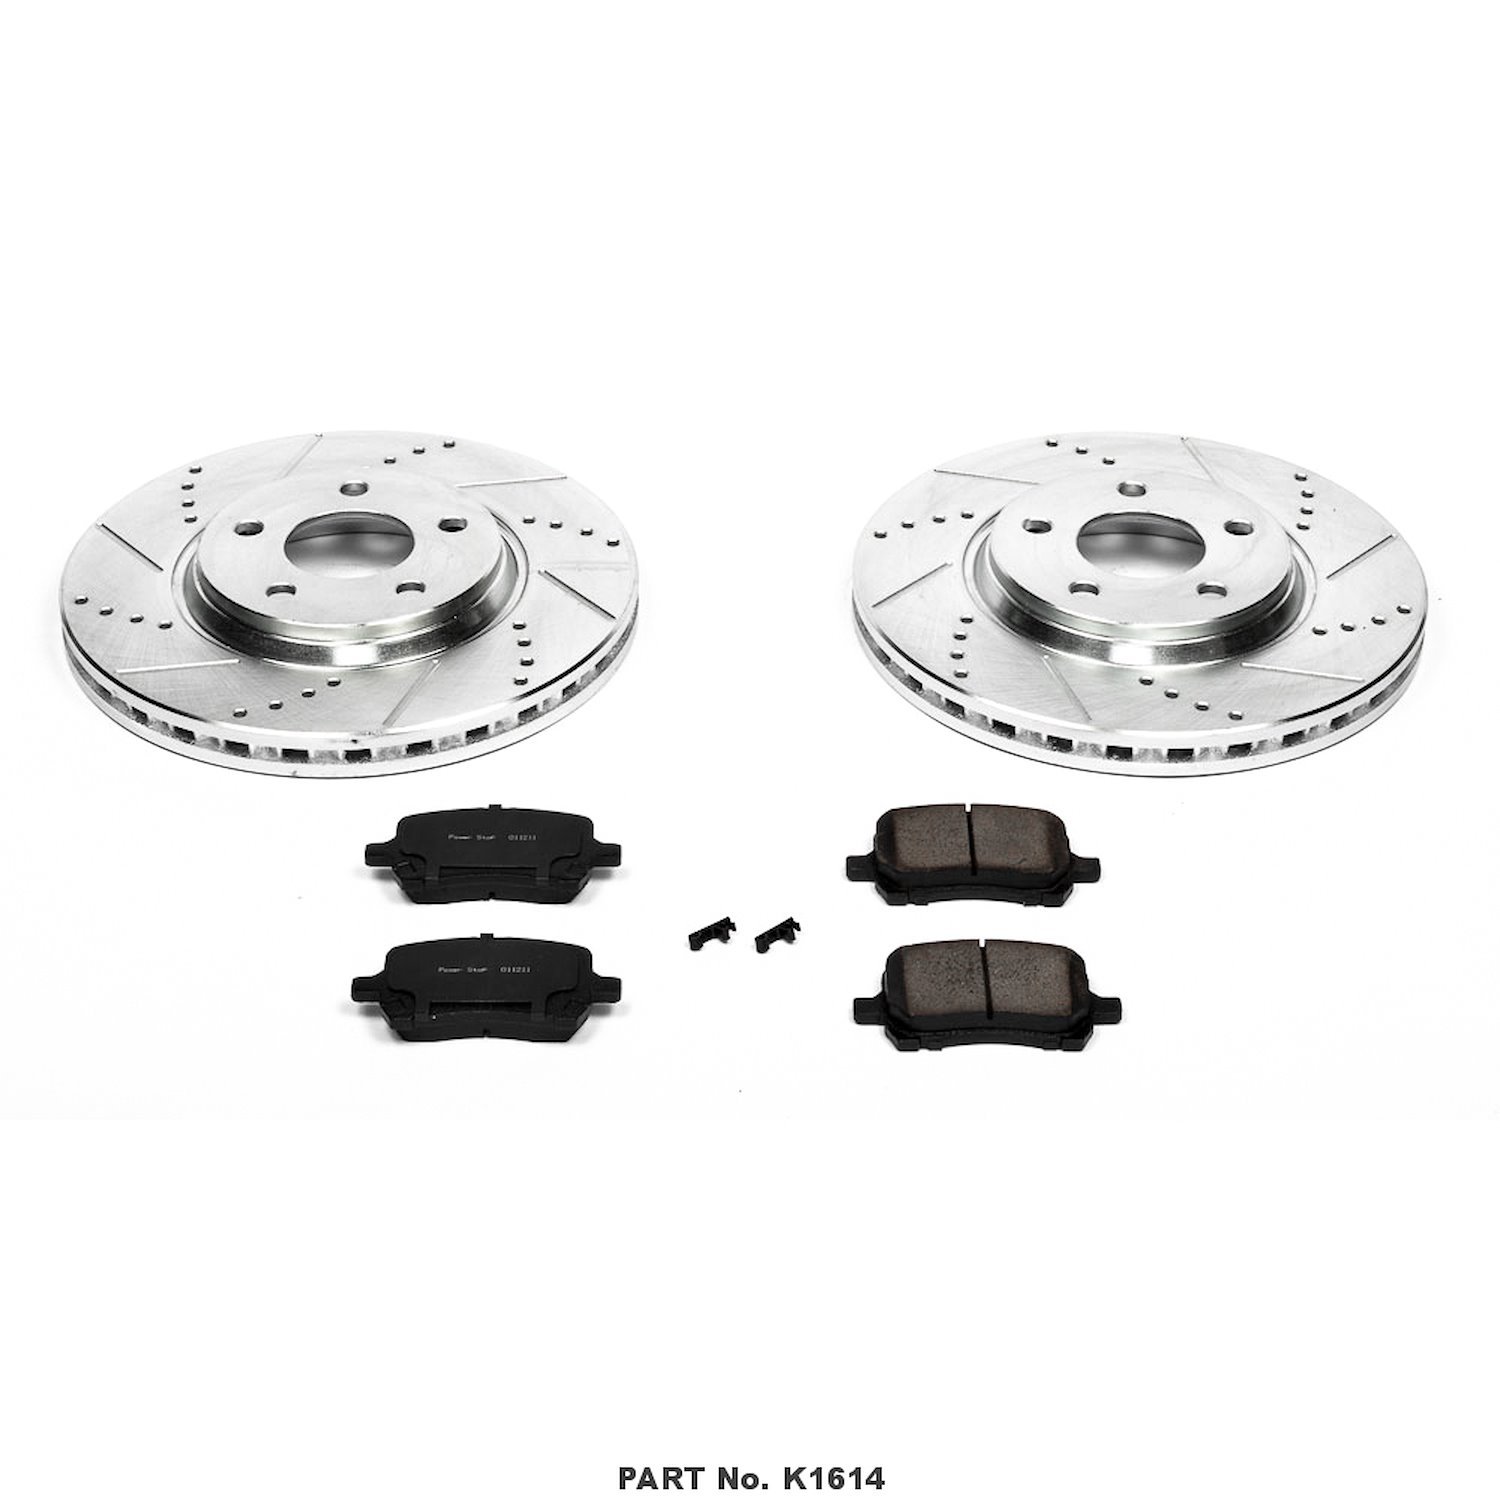 Z23 Evolution Brake Kit for Pontiac, Saturn and